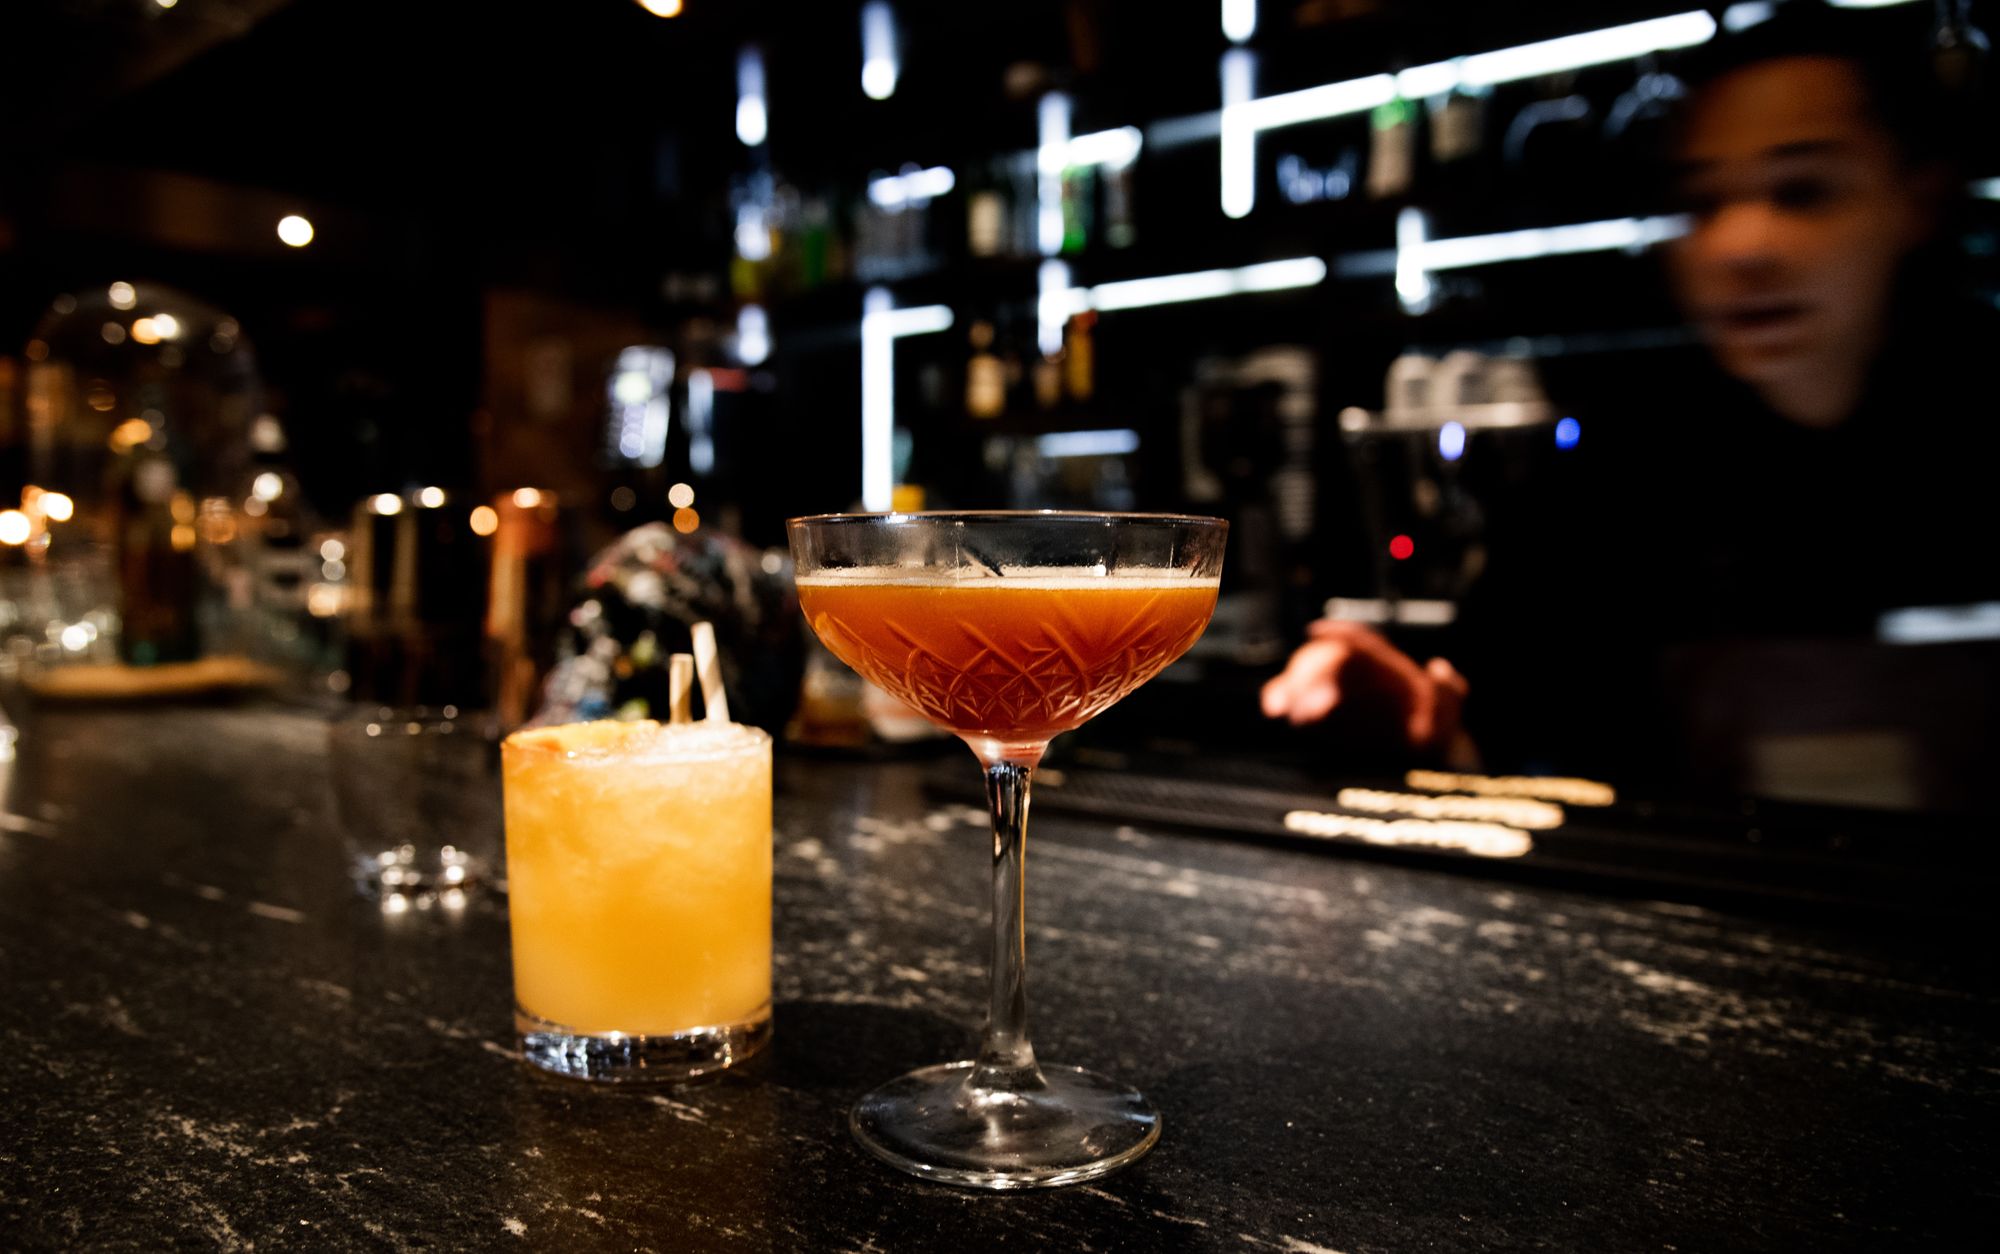 Cocktail making in bar at night 